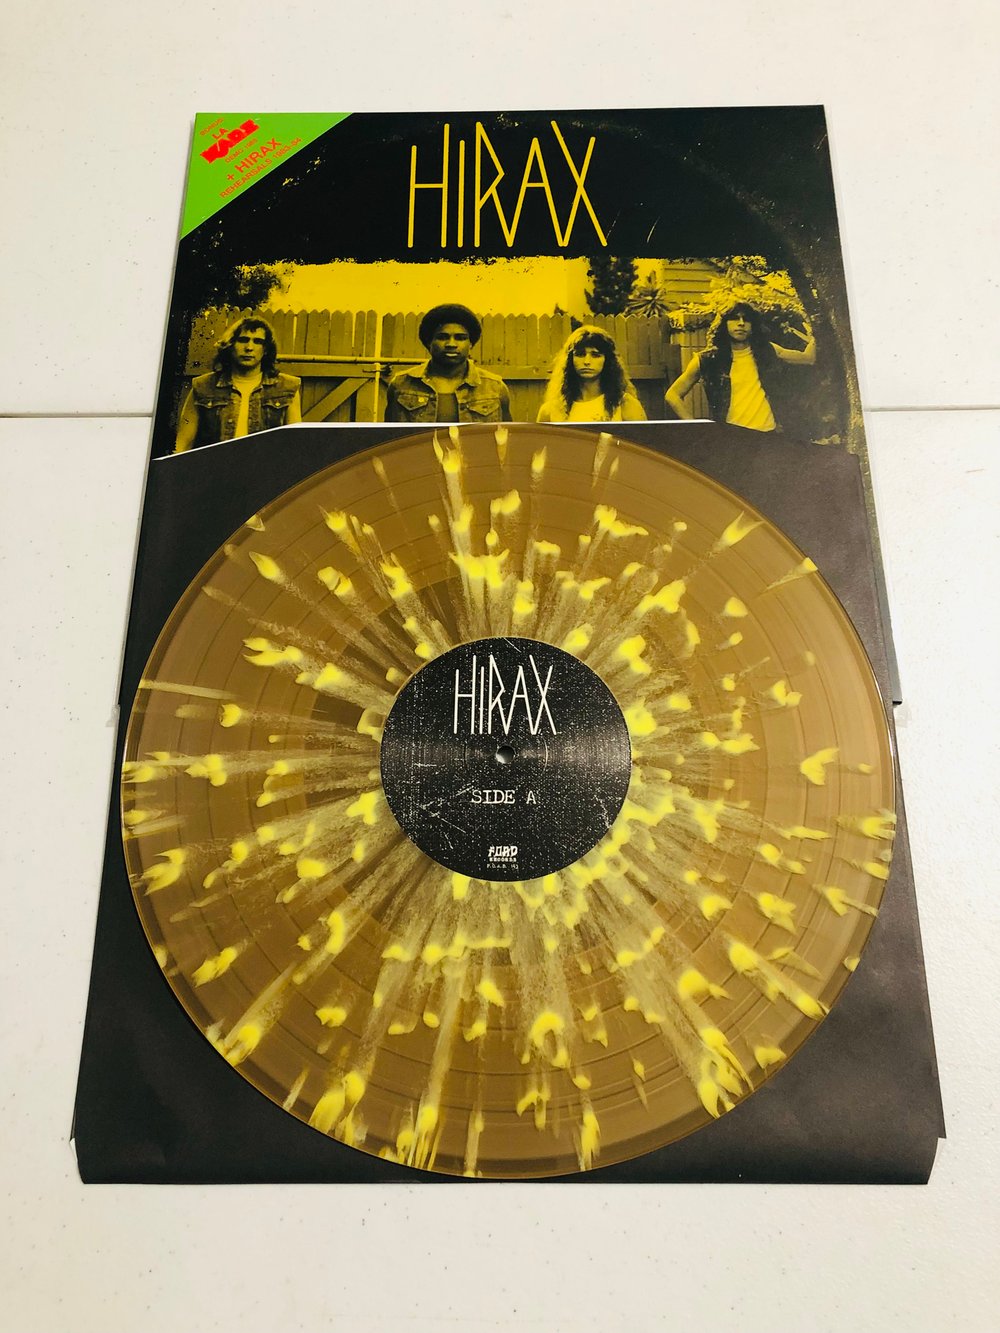 HIRAX demo / LA KAOS RARE limited edition